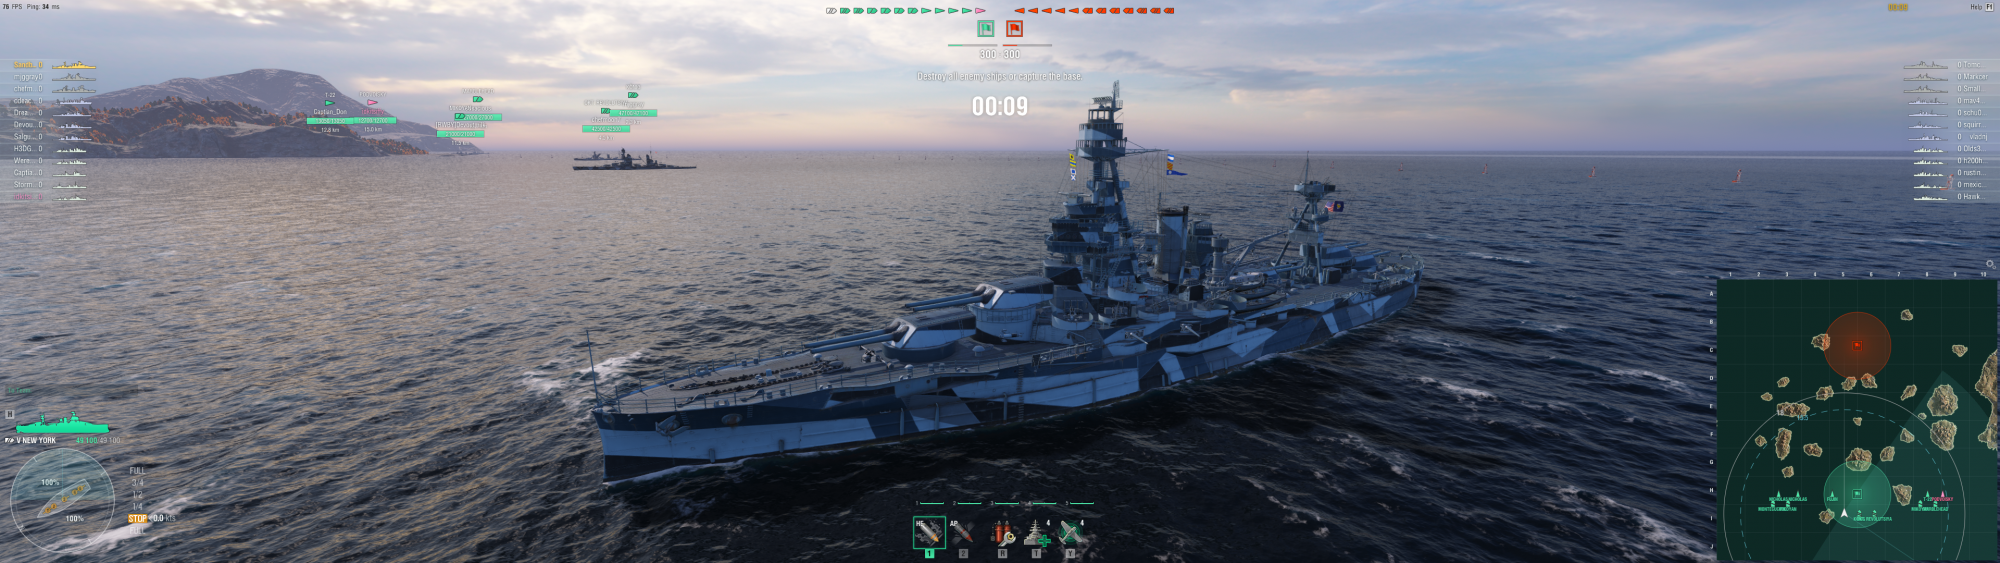 World of Warships Screenshot 2020.05.25 - 12.32.16.00.png